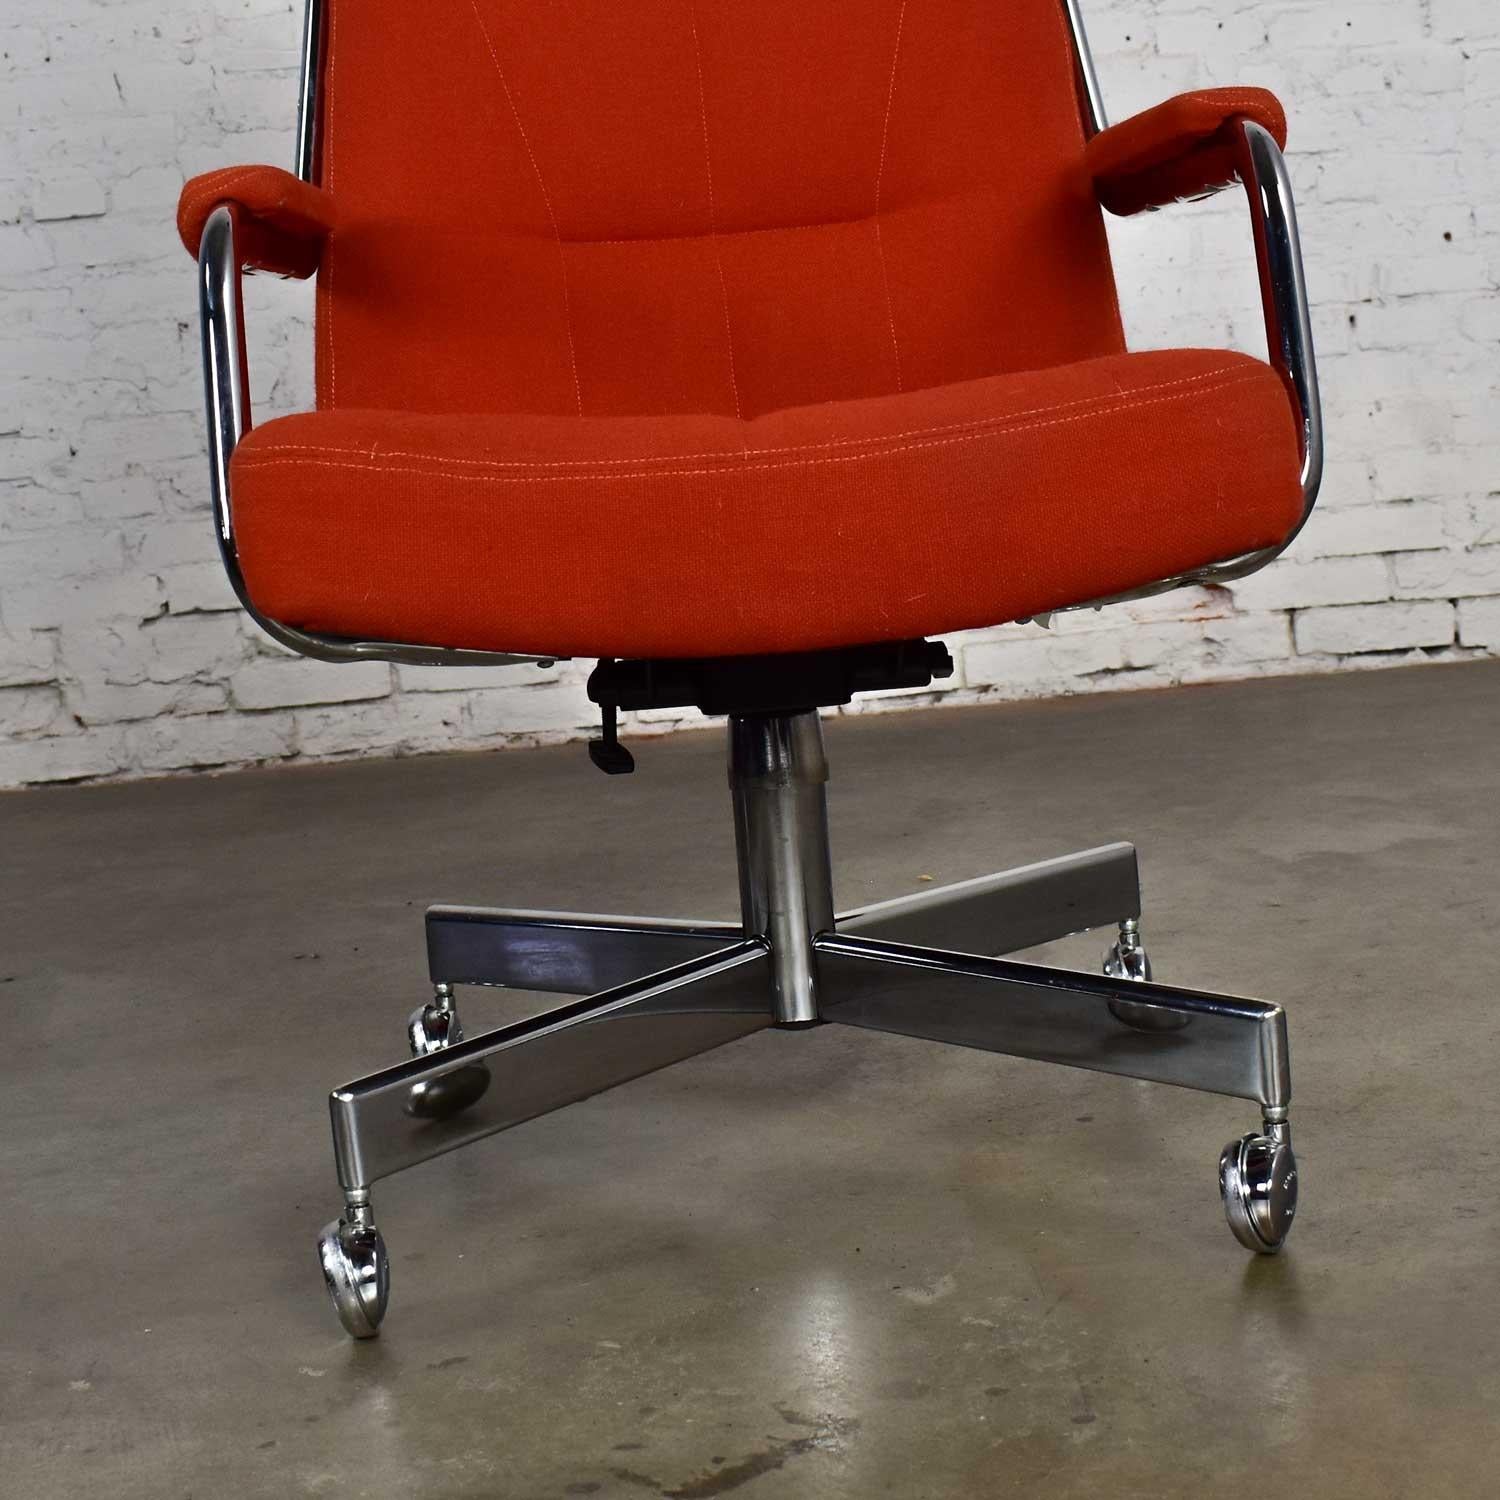 Chromcraft Adjustable Armed High Back Rolling Office Chair Orange Hopsack Fabric 7